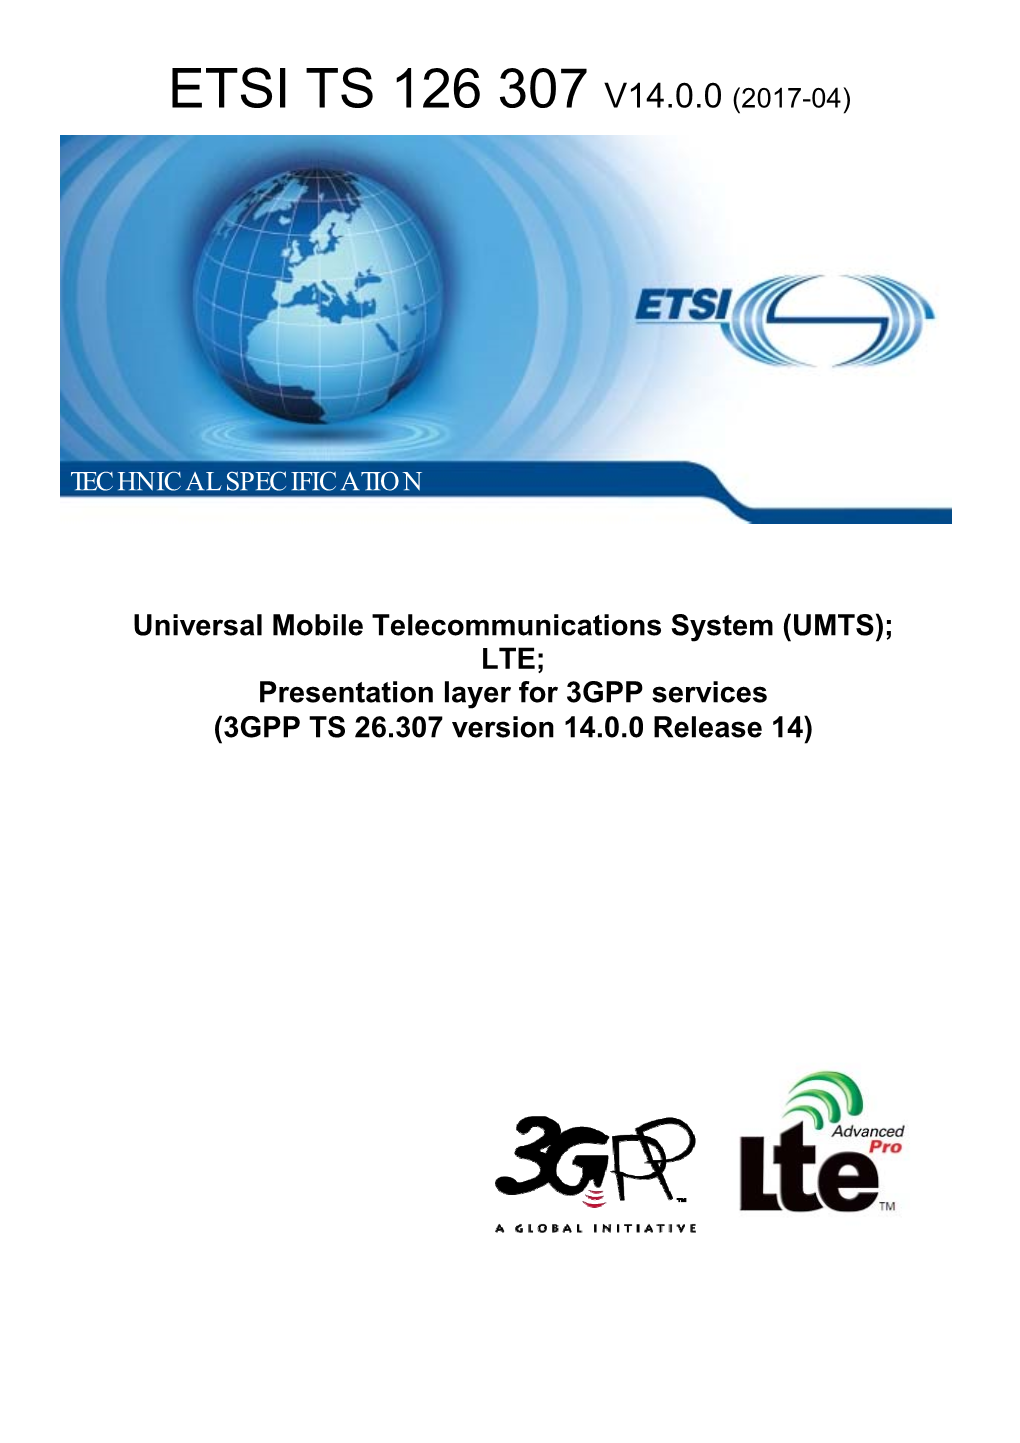 UMTS); LTE; Presentation Layer for 3GPP Services (3GPP TS 26.307 Version 14.0.0 Release 14